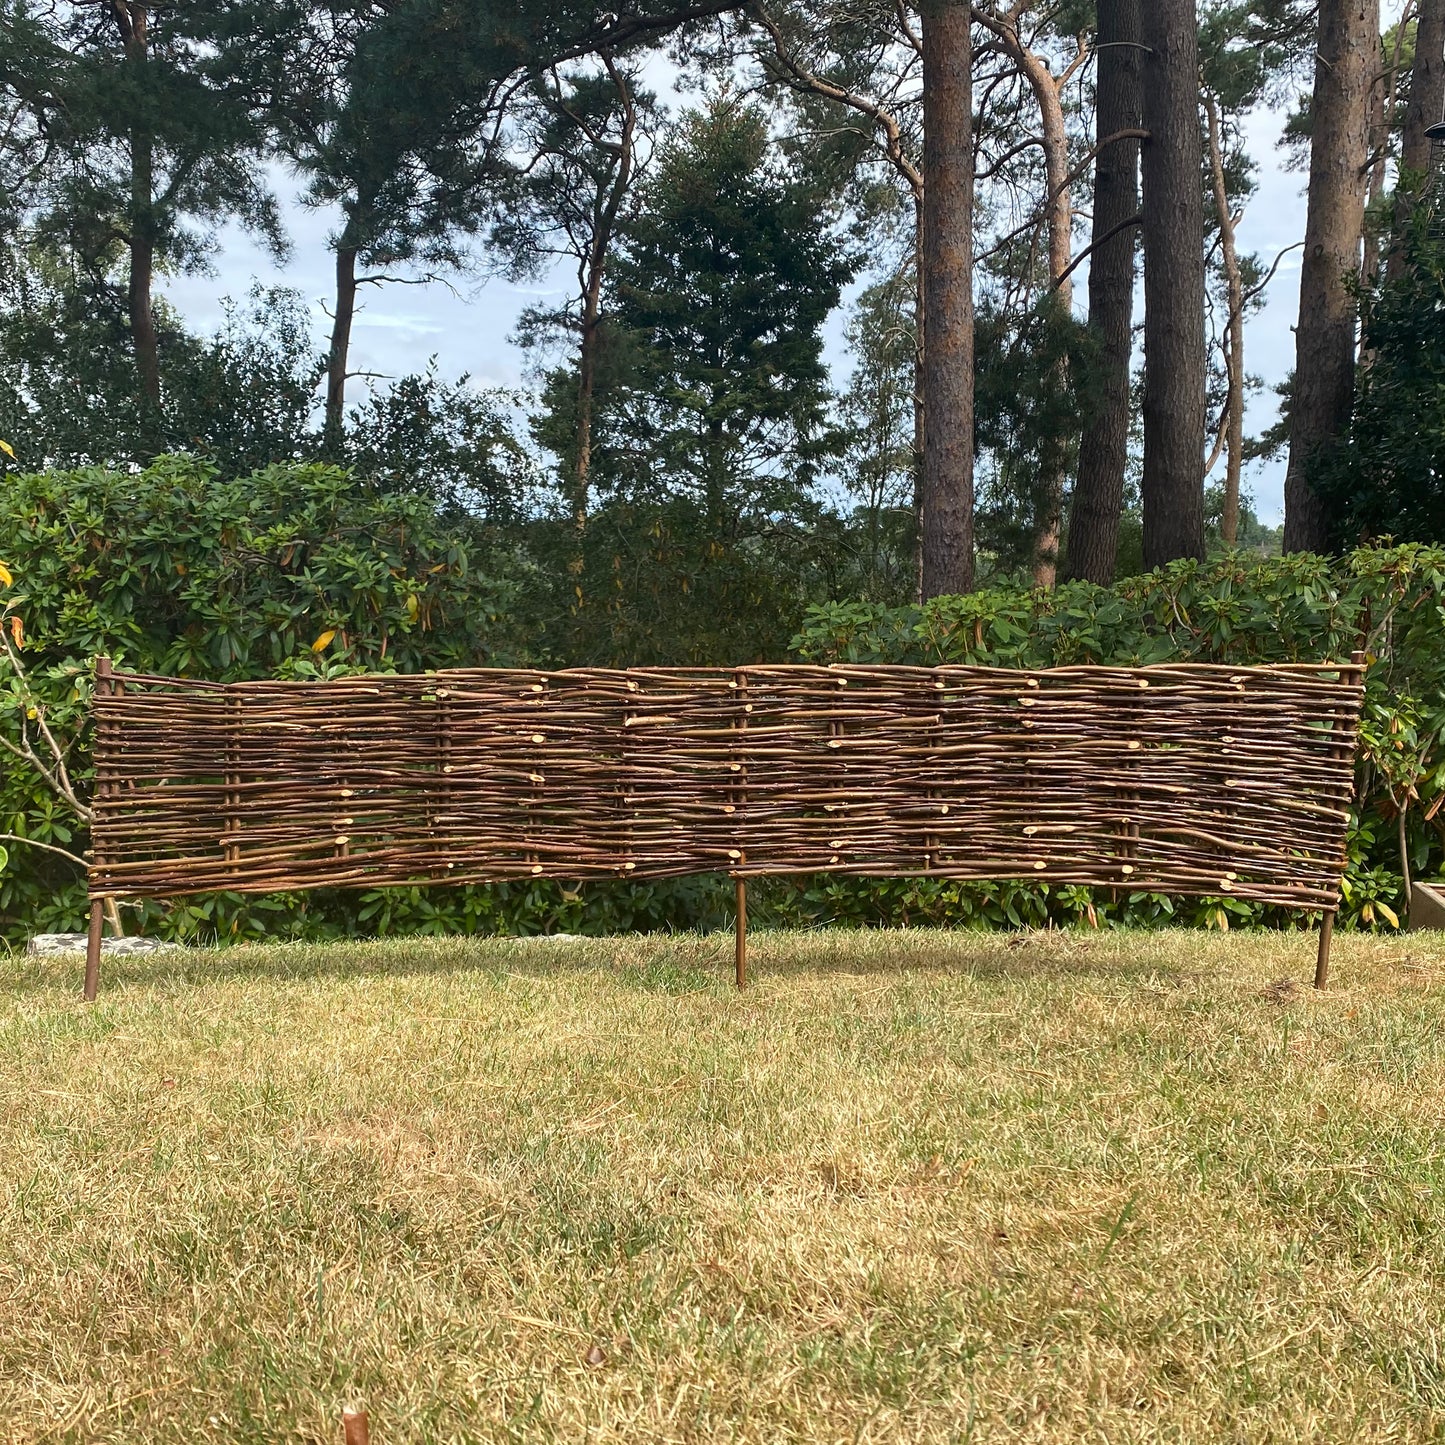 Willow Hurdles Lawn Edging (120cm x 20cm) - 5 Panels